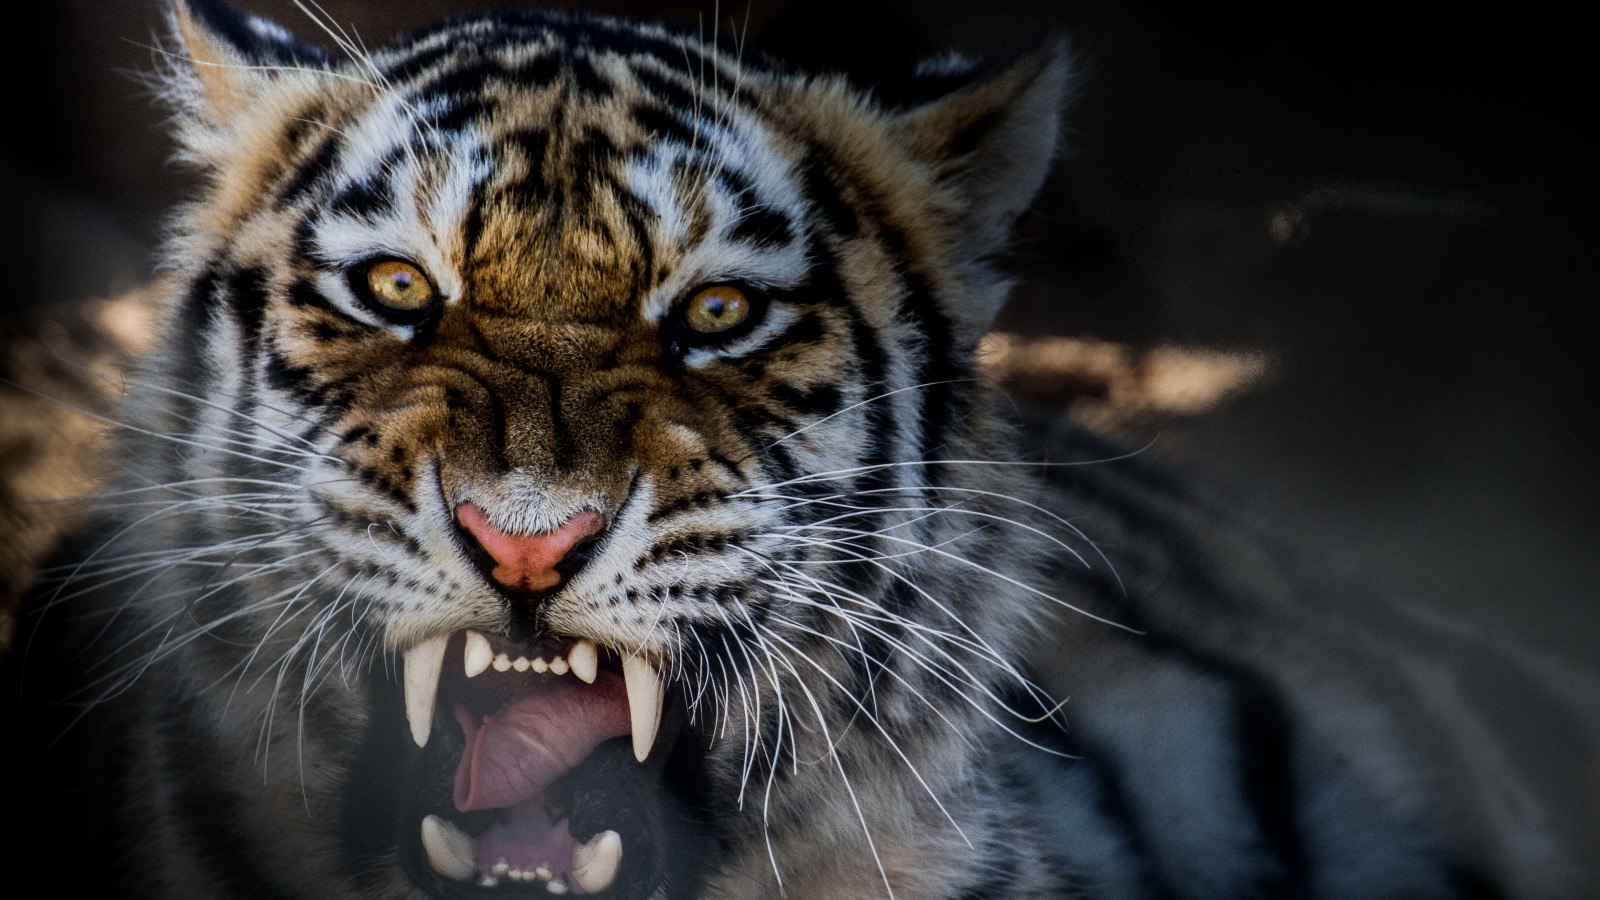 General 1600x900 tiger animals teeth yellow eyes hunter closeup looking at viewer fangs wildlife